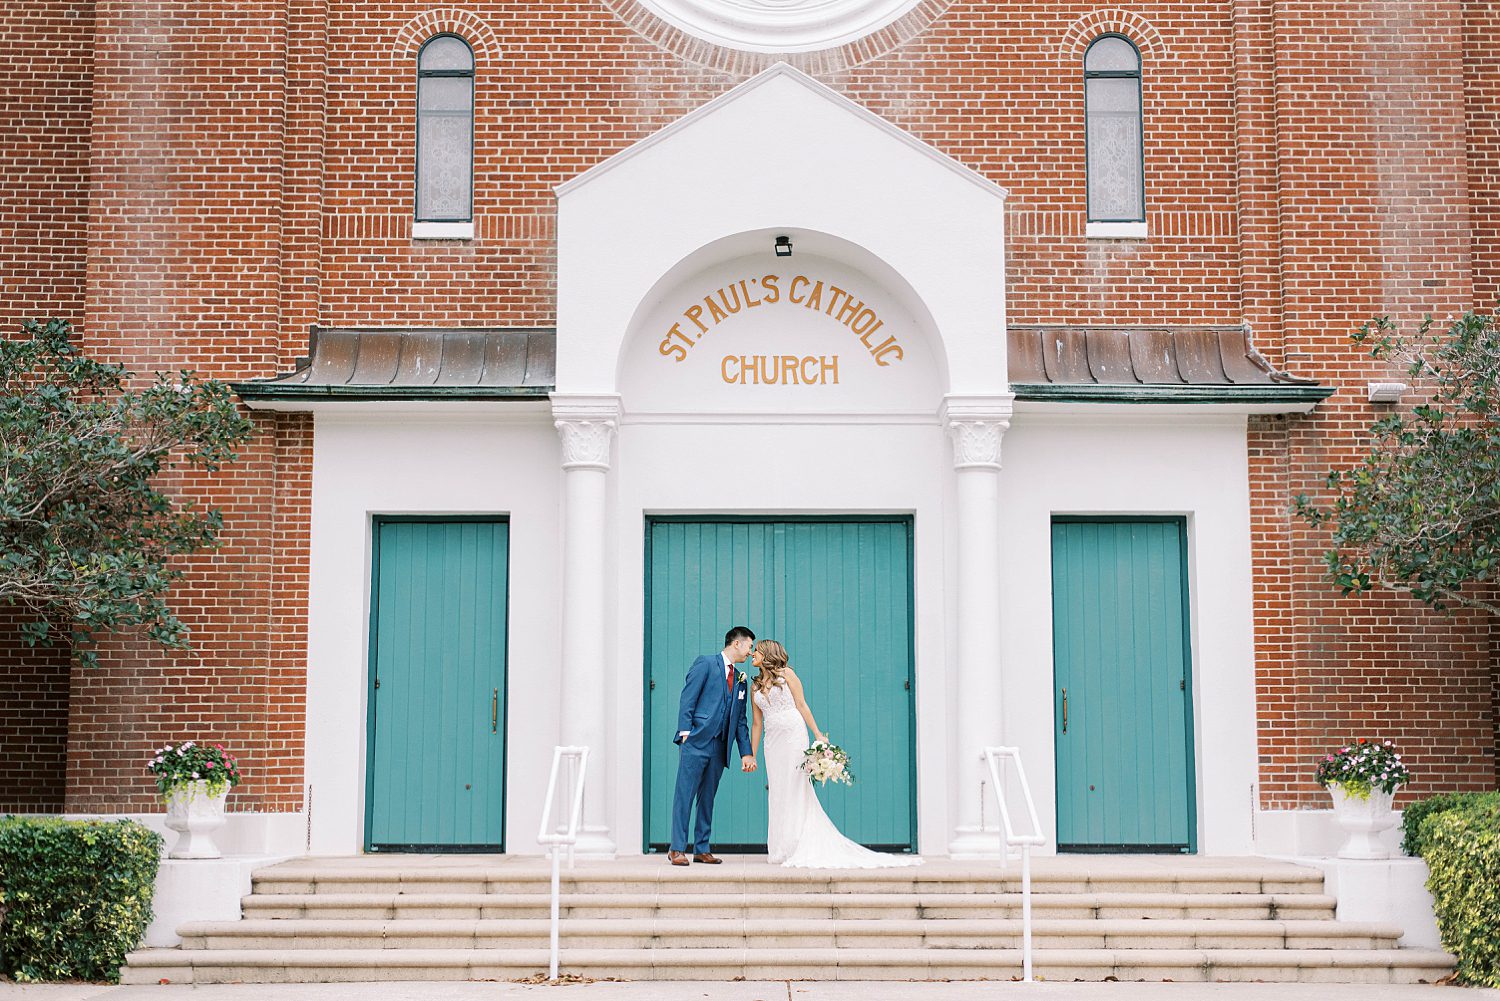 newlyweds hug by teal doors of St. Paul's Catholic Church in Tampa FL